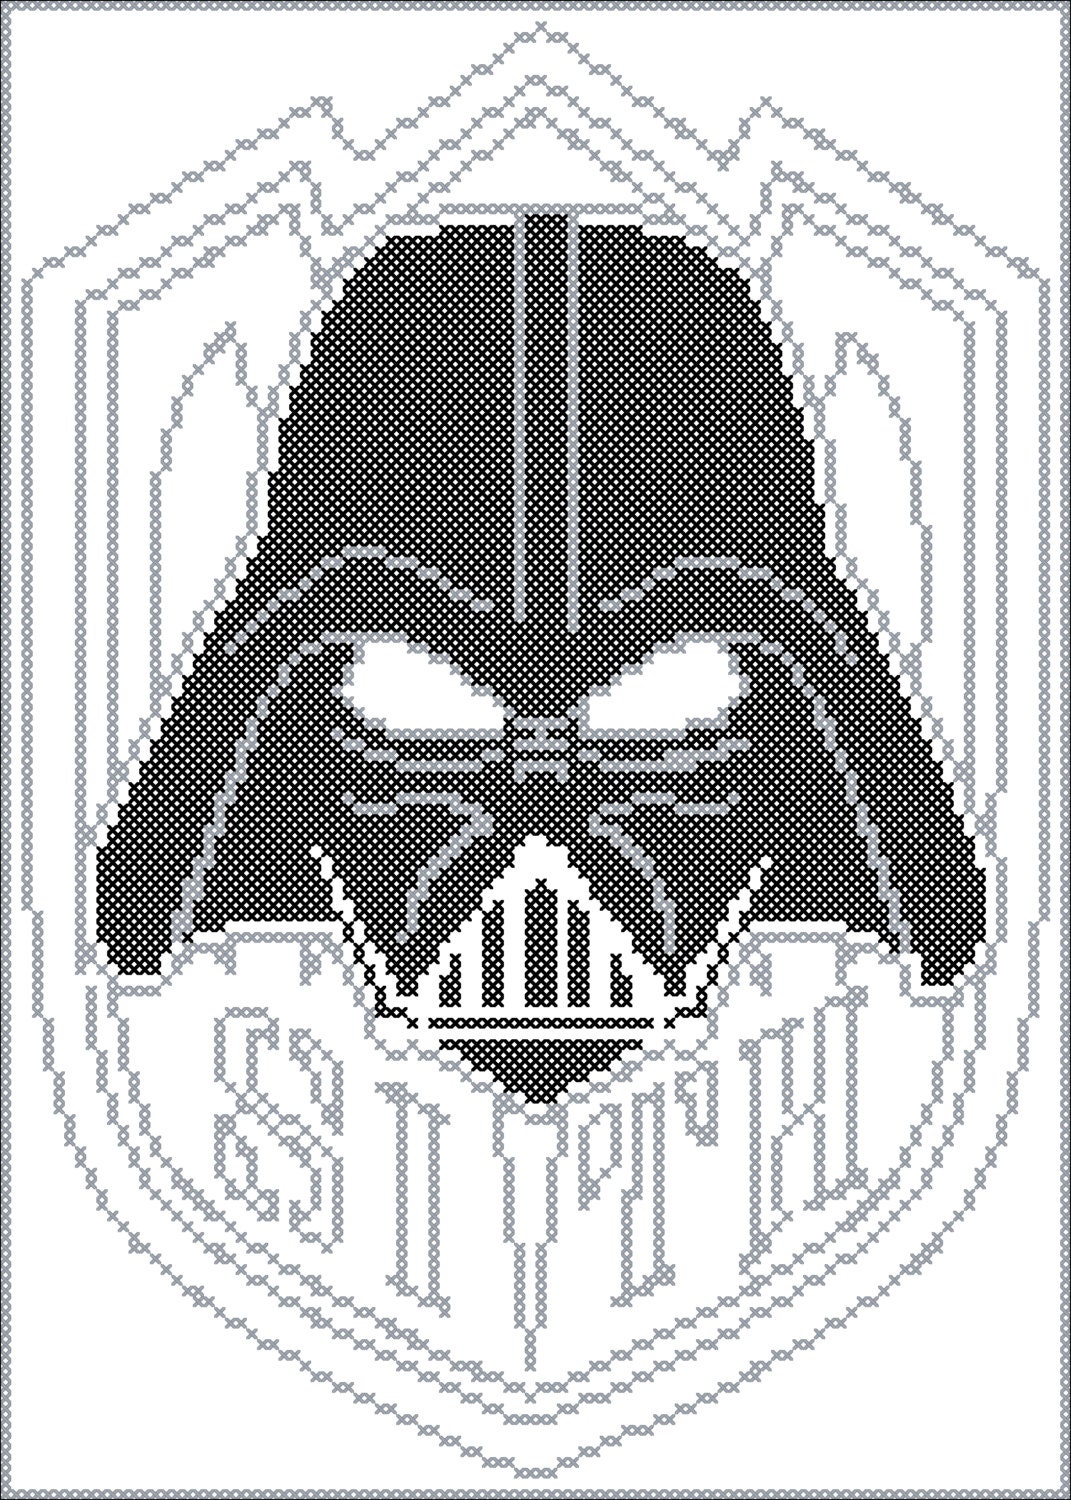 Download BOGO FREE Cross stitch STAR Wars Darth Vader pdf cross